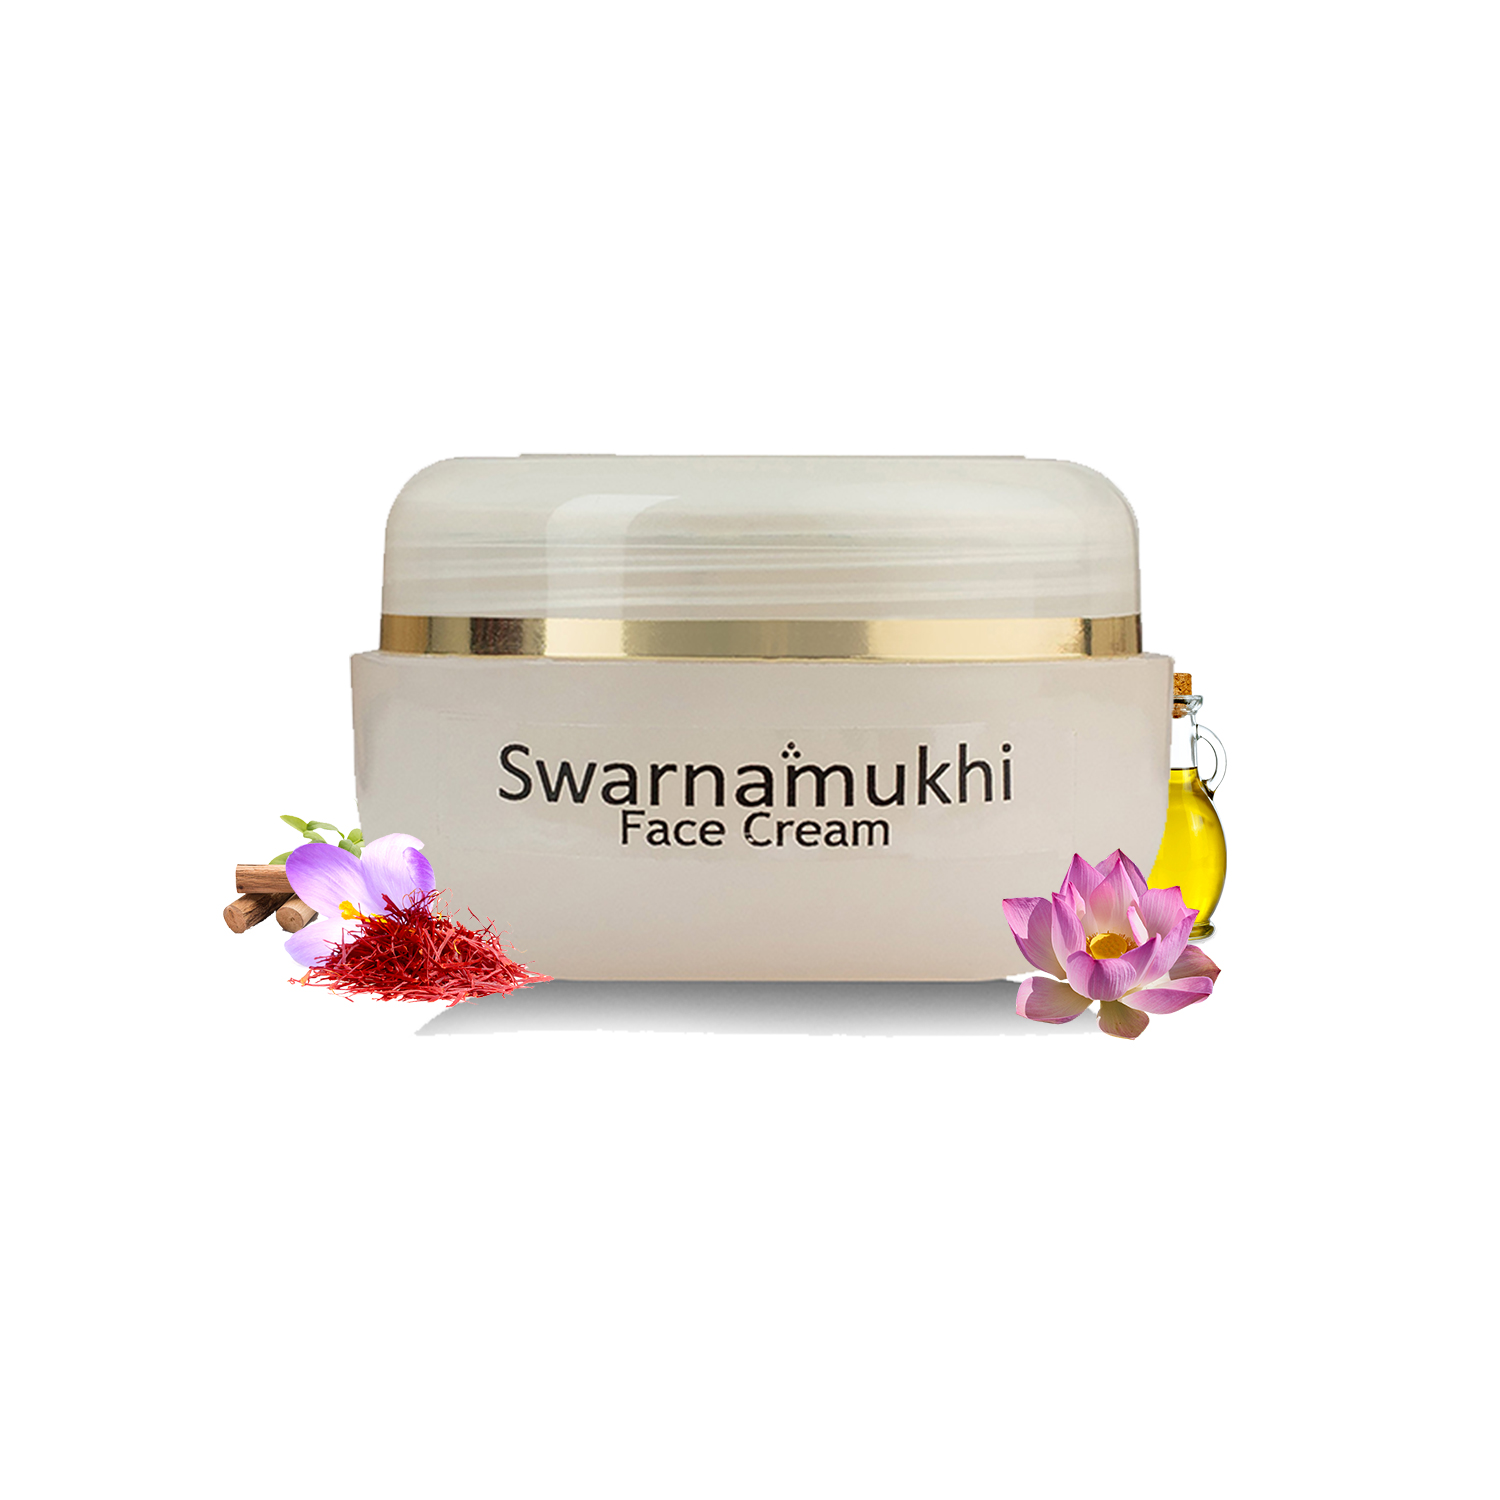 Swarnamukhi Face Cream